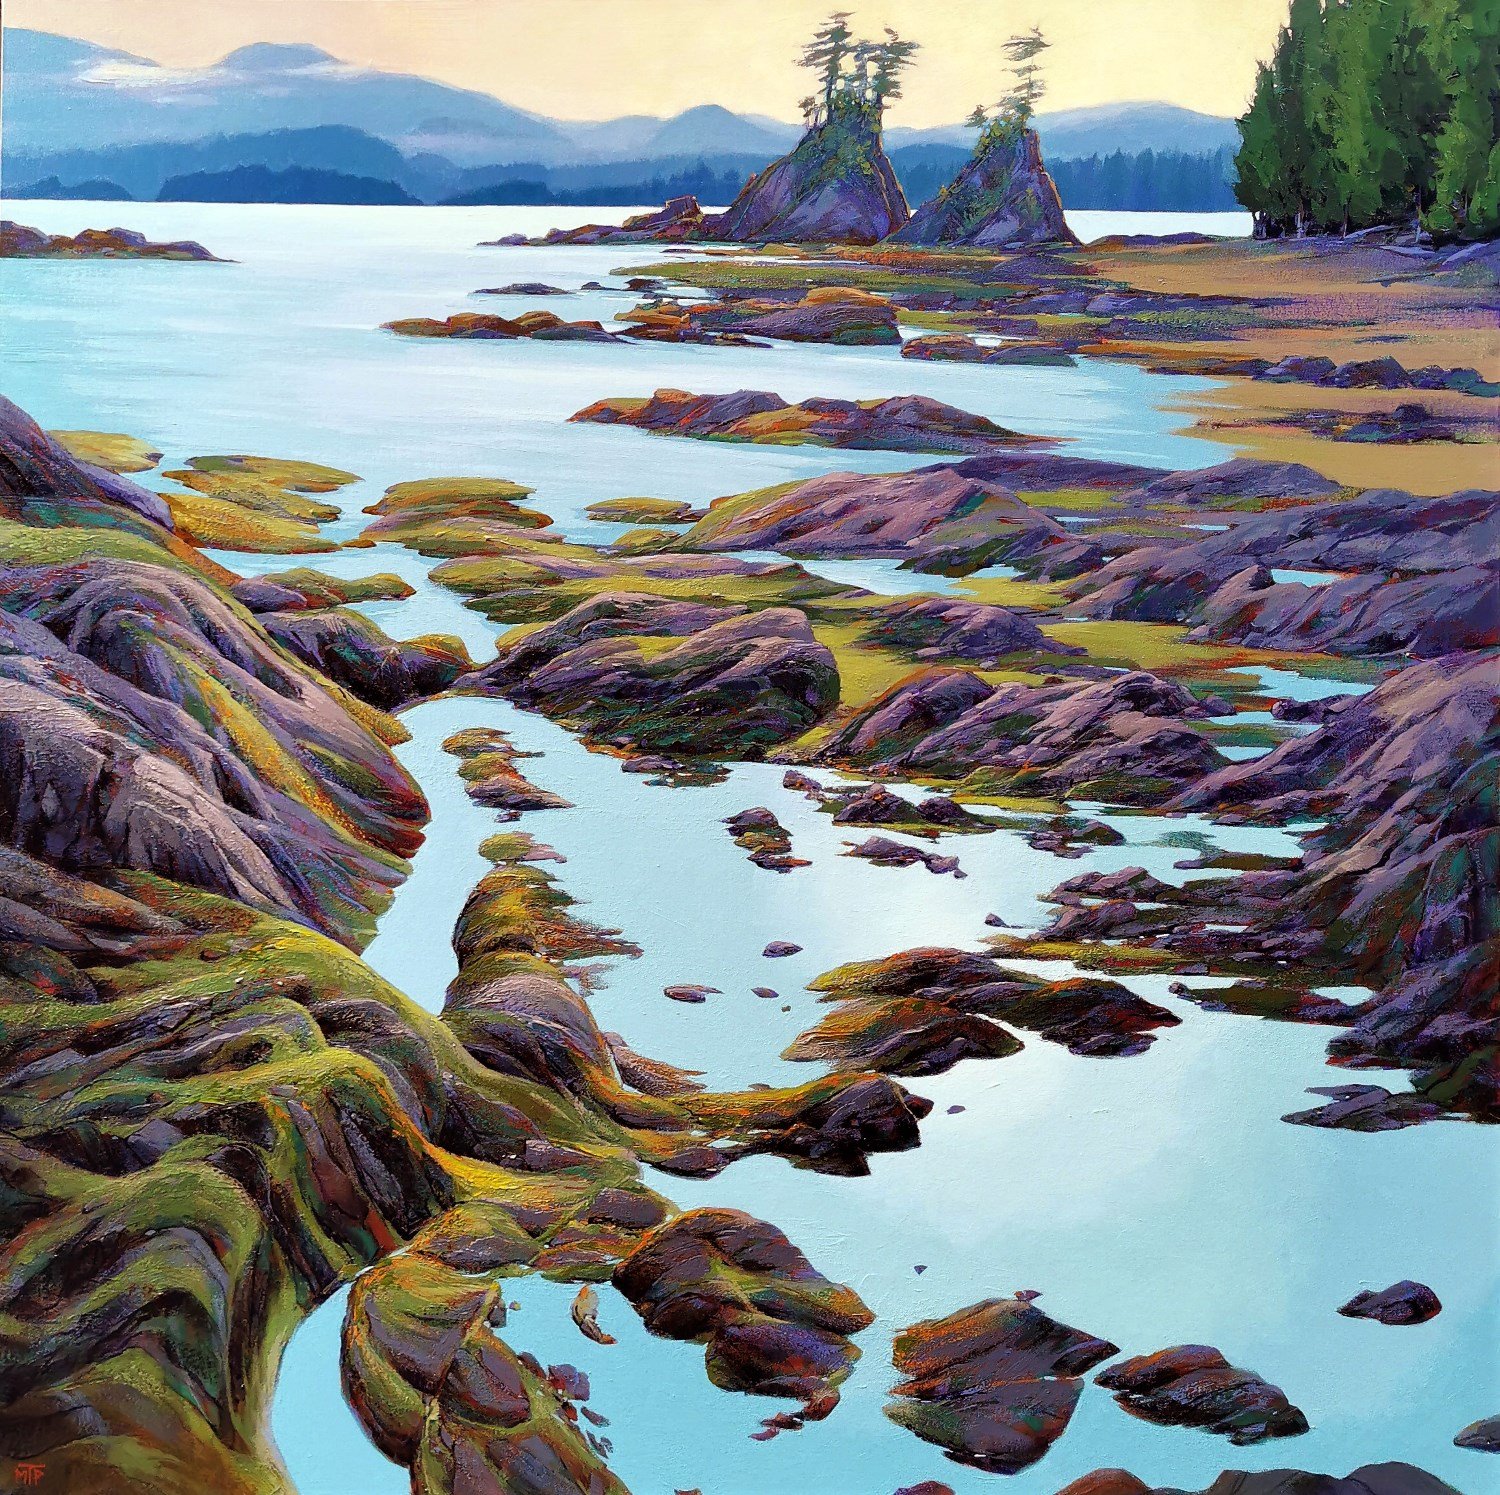  Coastal Patterns    Acrylic on canvas, 48x48 inches, $6,500  